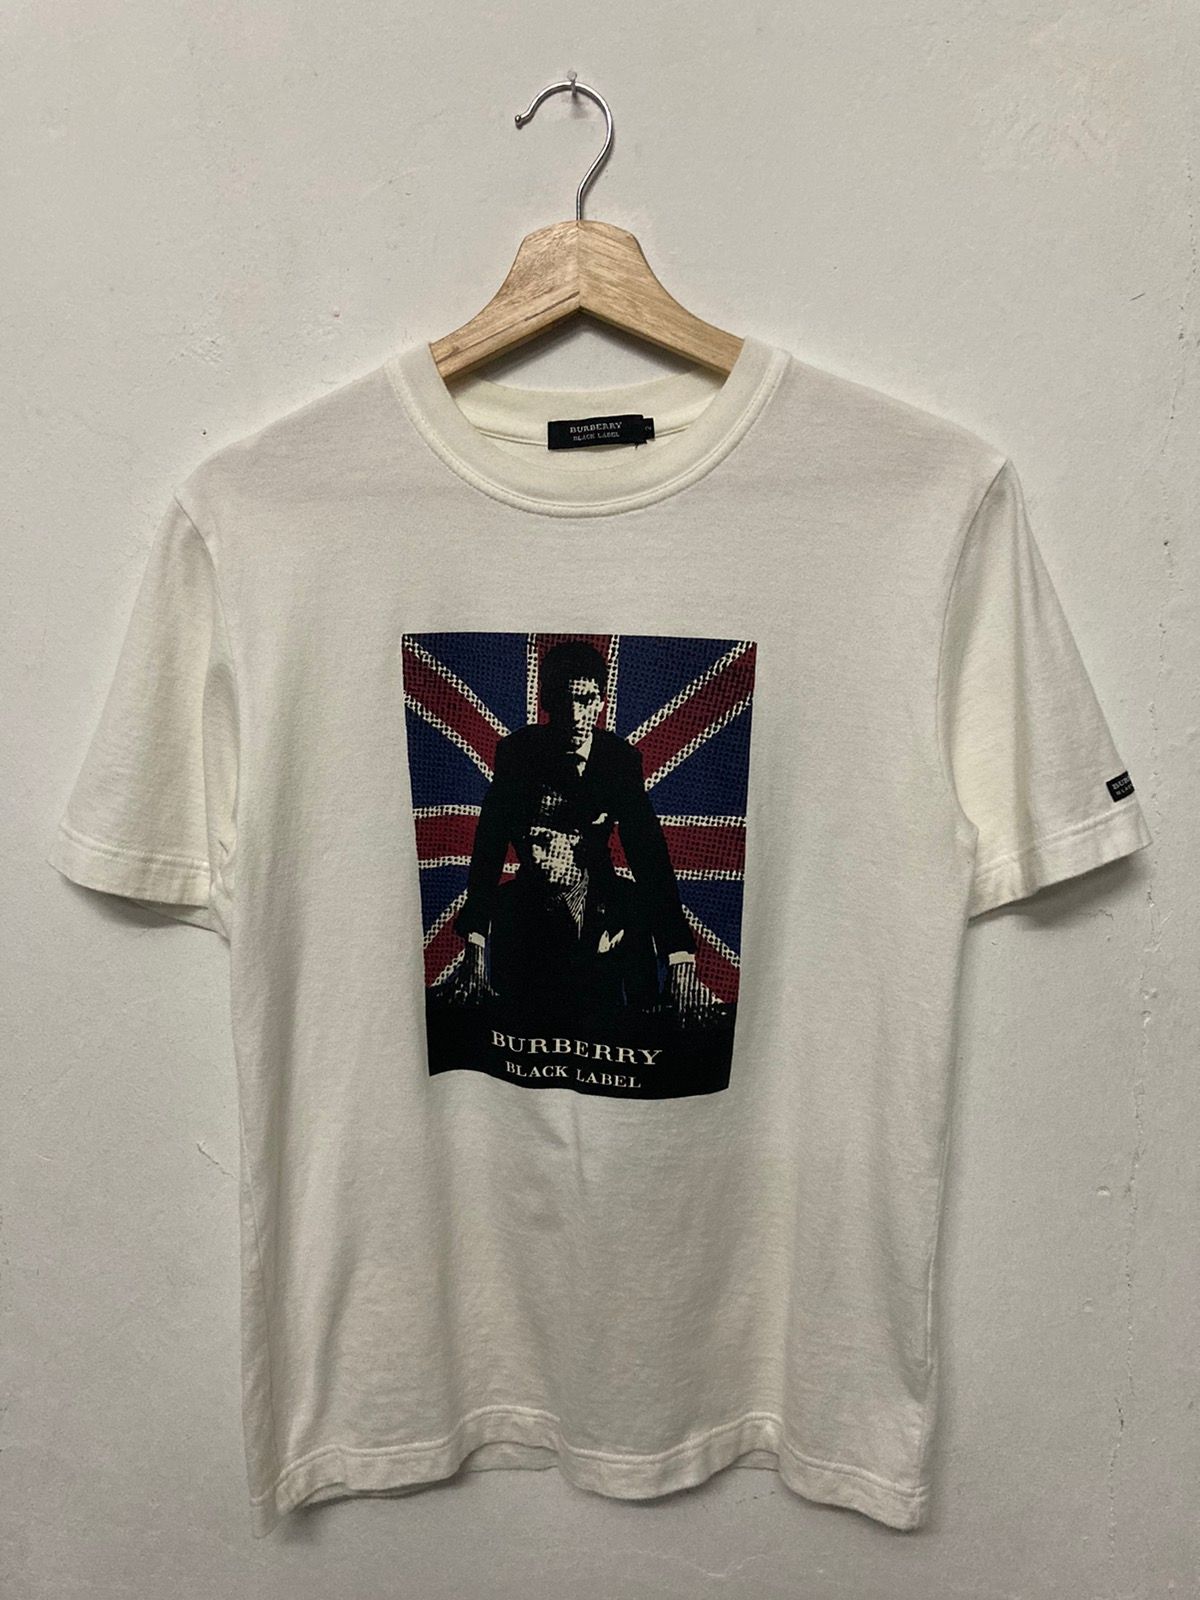 Burberry Black Label T-shirt - 1